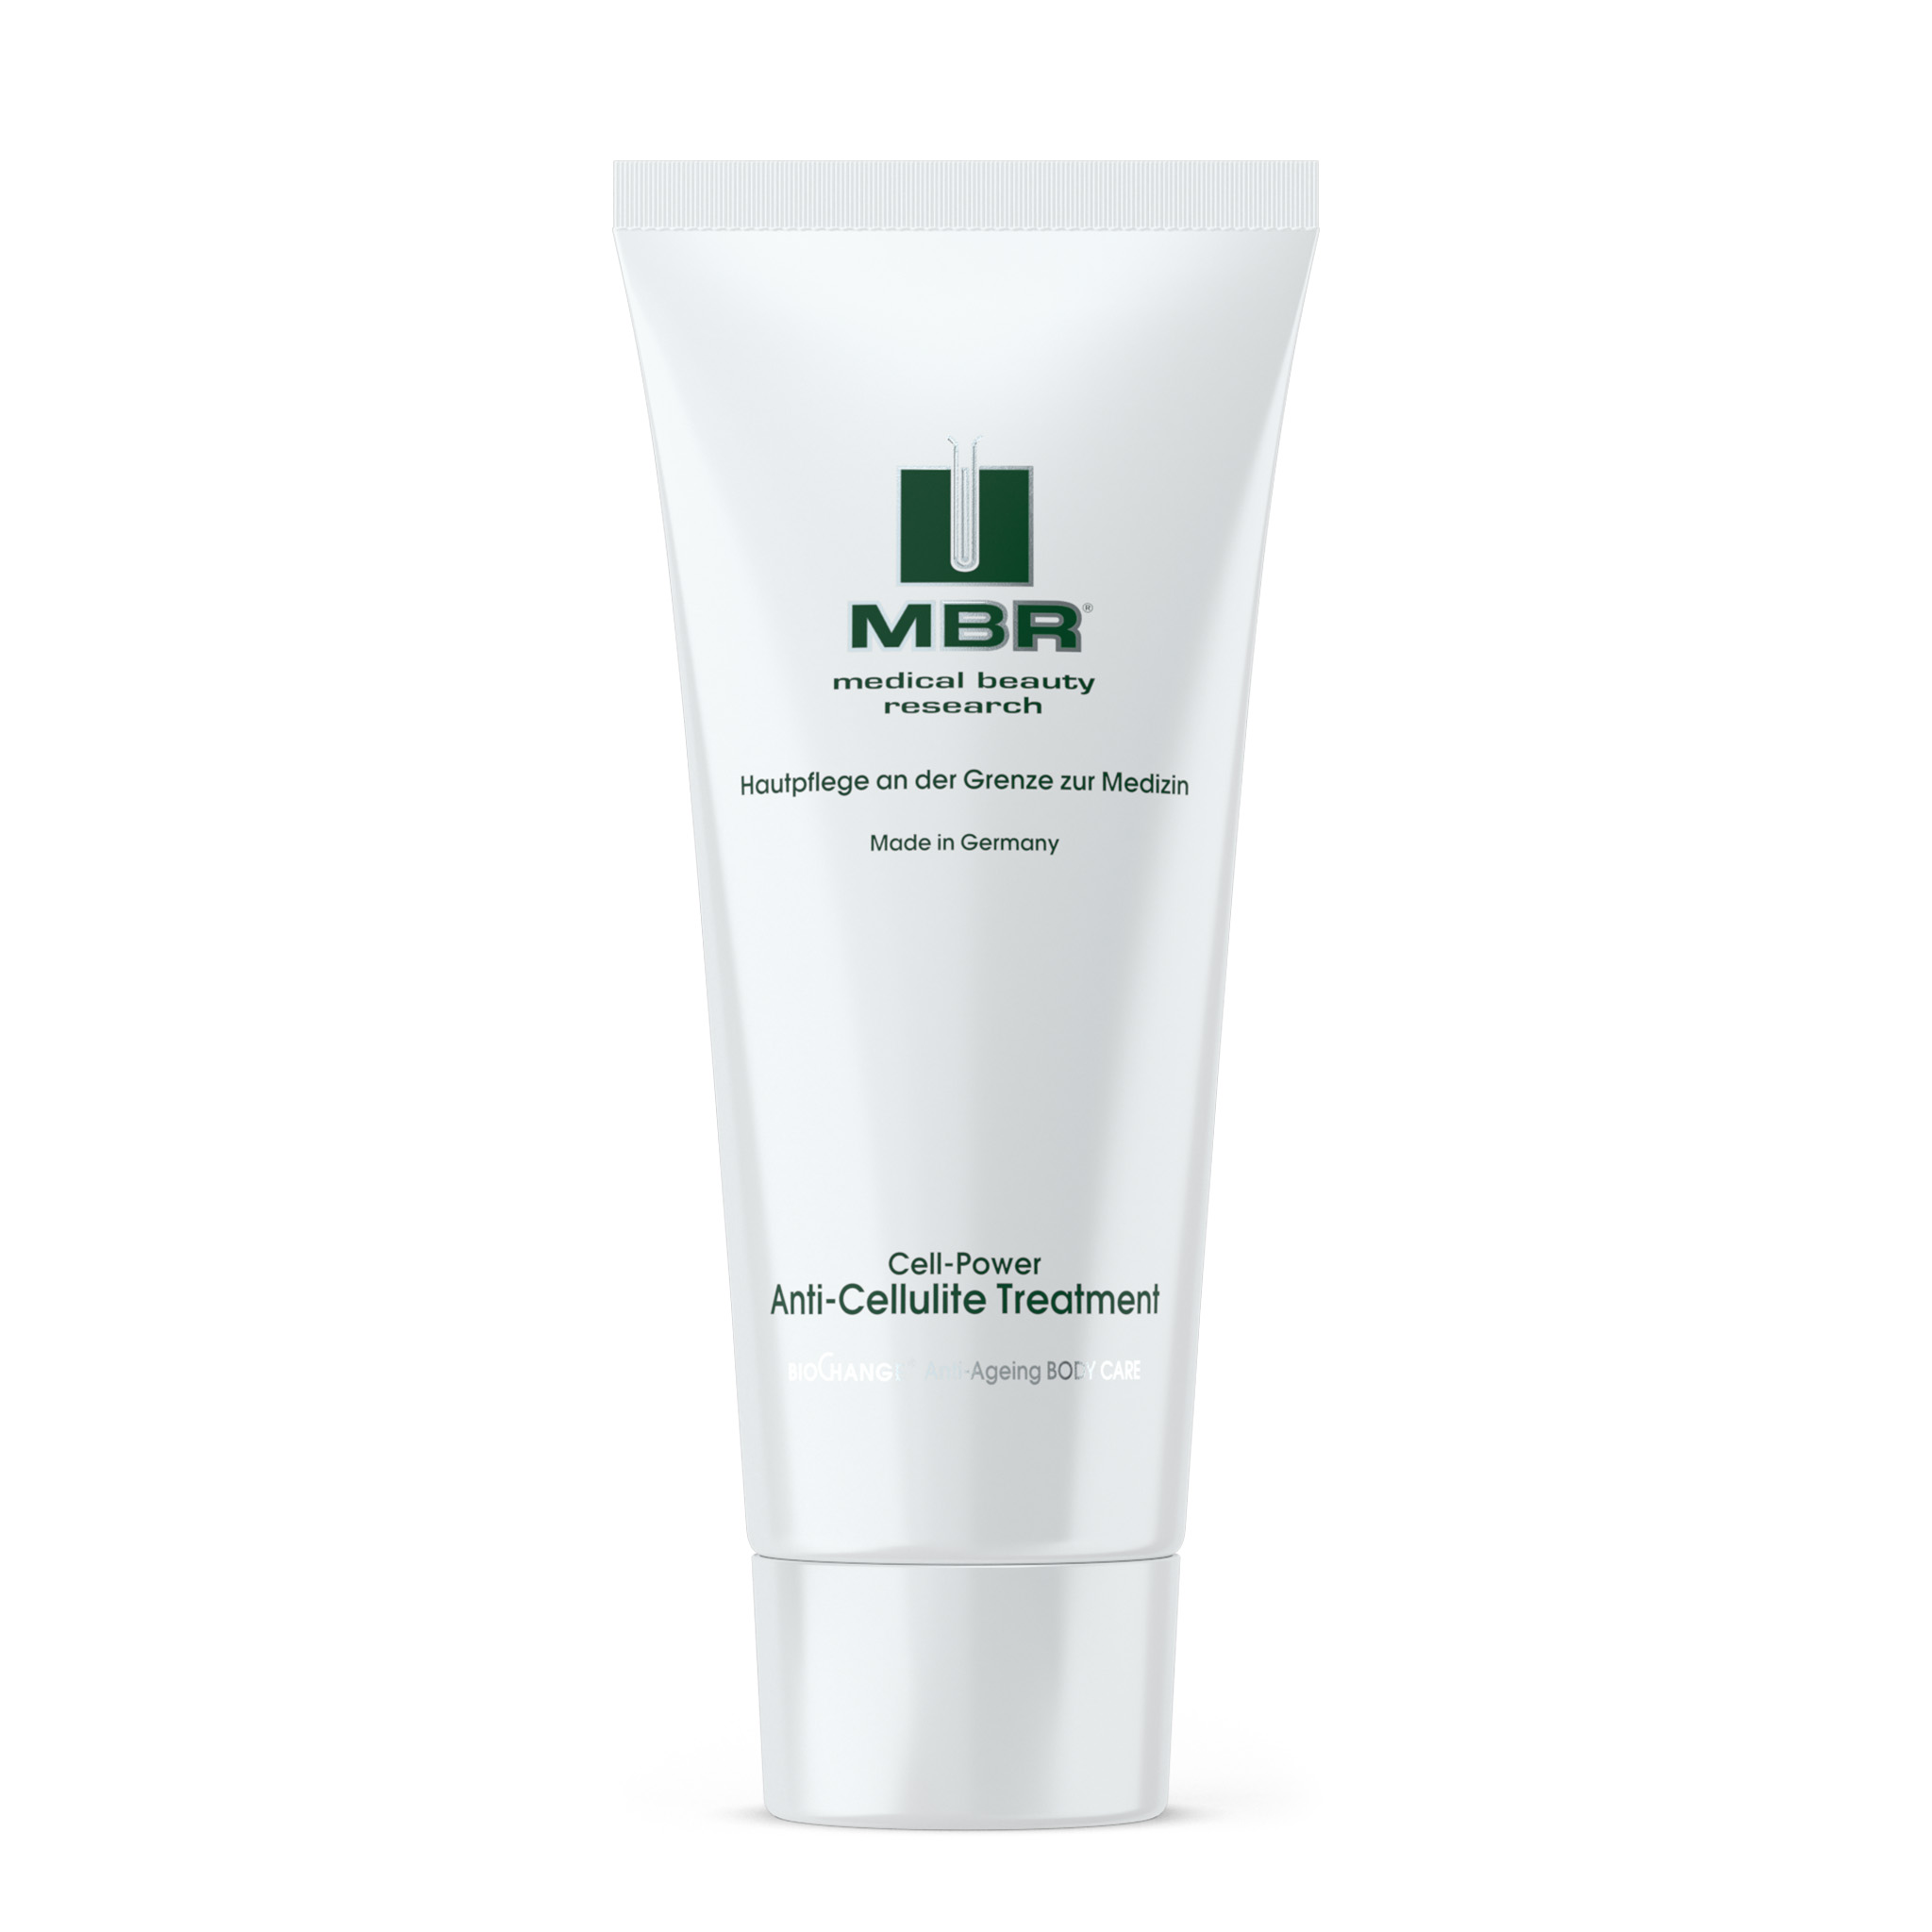 MBR® Cell-Power Anti-Cellulite Treatment – strengthening cream